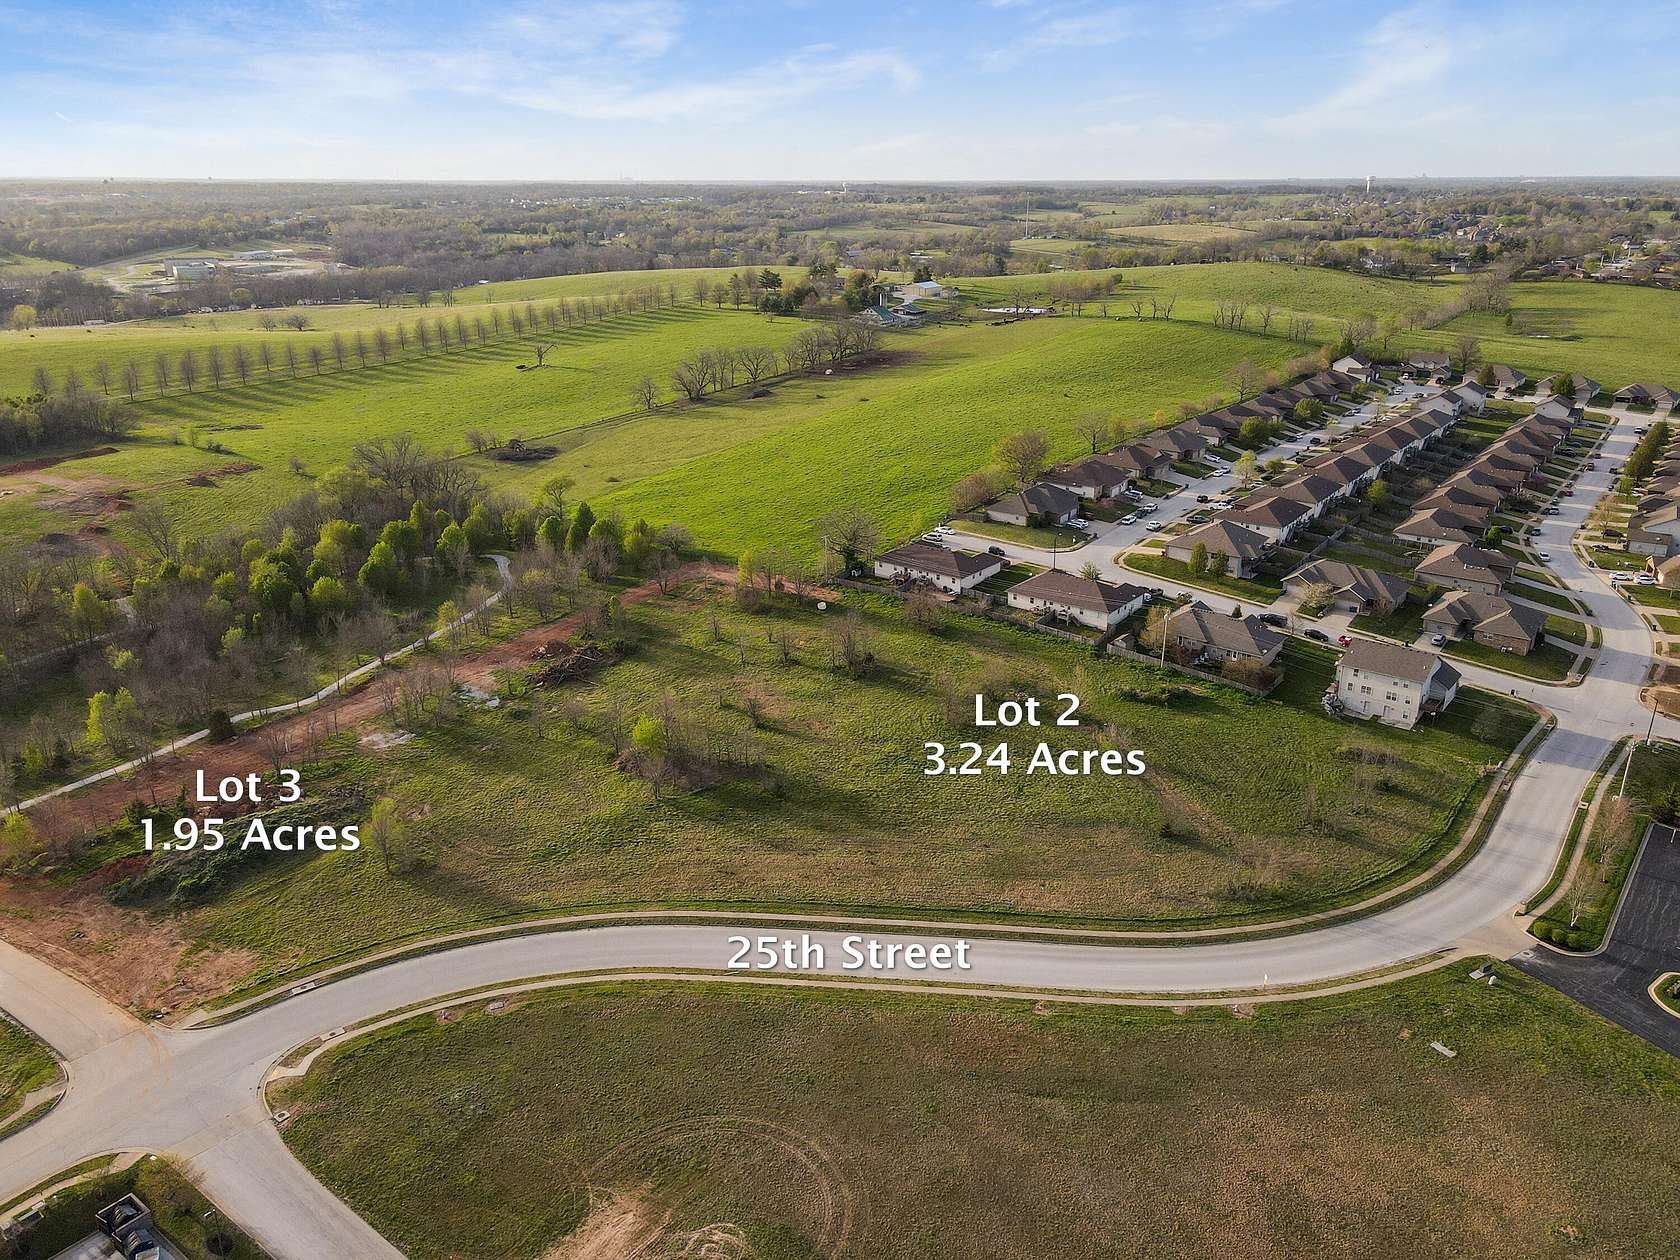 2 Acres of Commercial Land for Sale in Ozark, Missouri